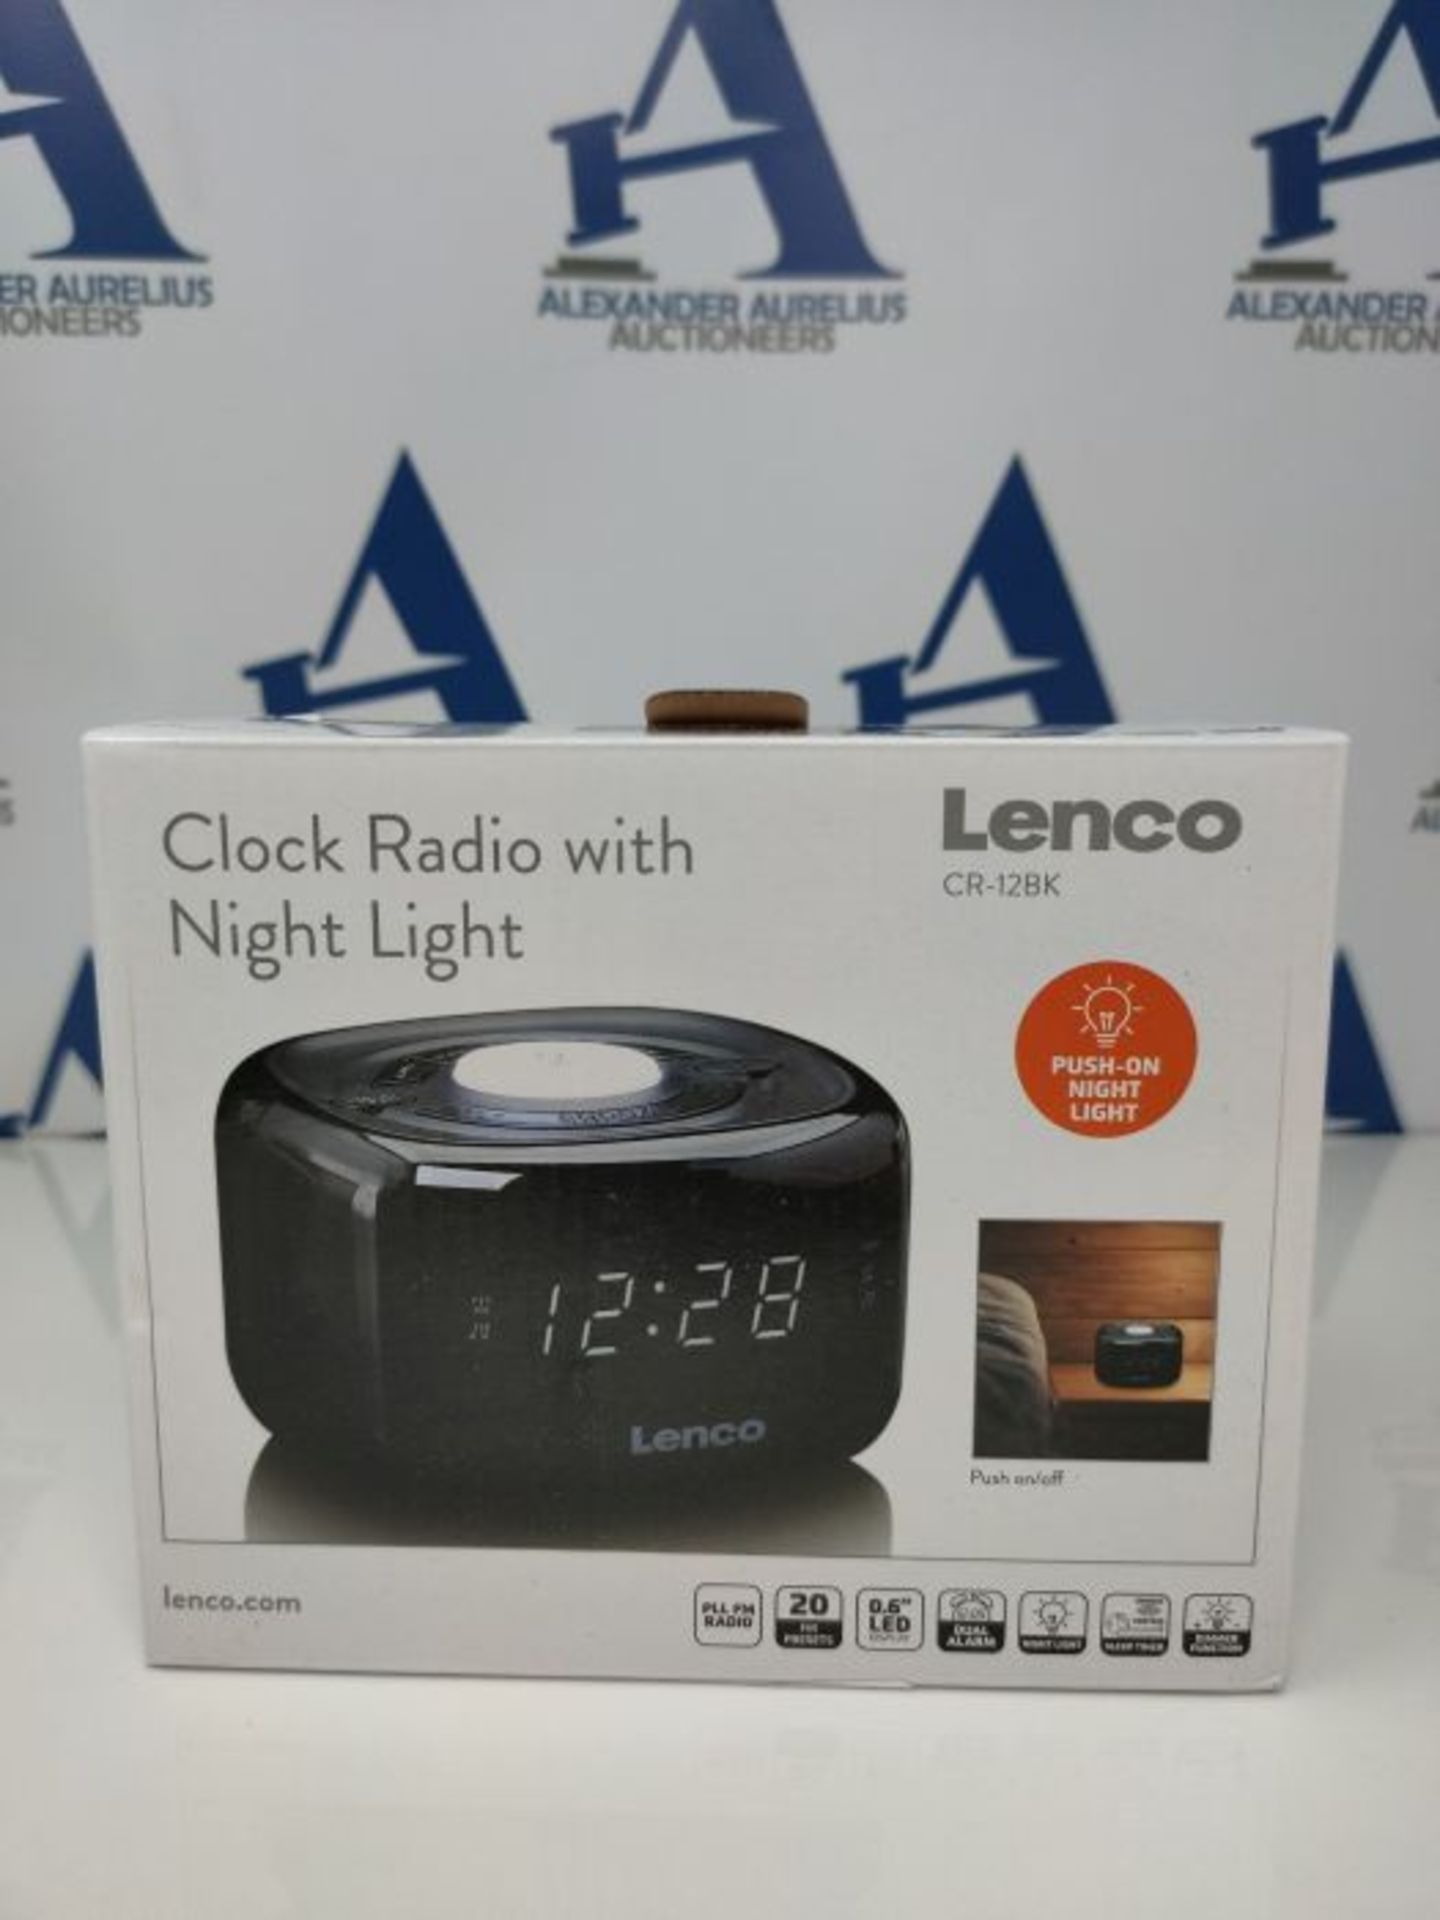 Lenco CR-12 Uhrenradio - Wecker mit Nachtlicht-Funktion - Easy Snooze - Sleep-Timer - - Image 2 of 3